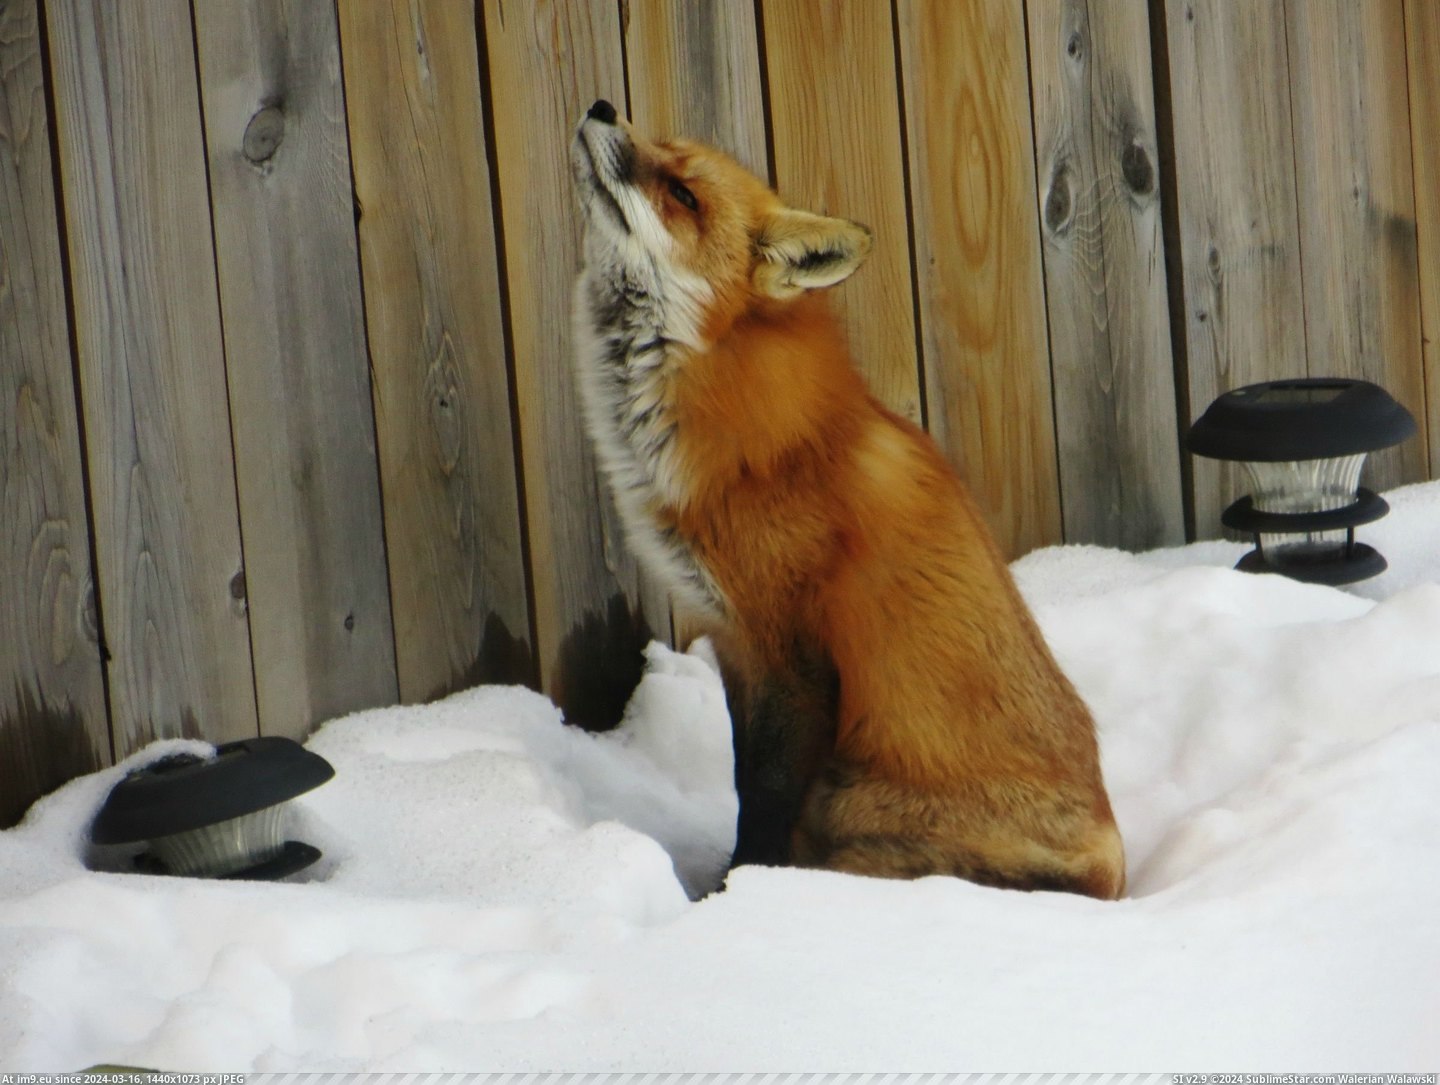 #Red #Canada #Alberta #Backyard #Fox #Sleeping [Pics] Red fox sleeping in my backyard! Alberta, Canada. 3 Pic. (Изображение из альбом My r/PICS favs))